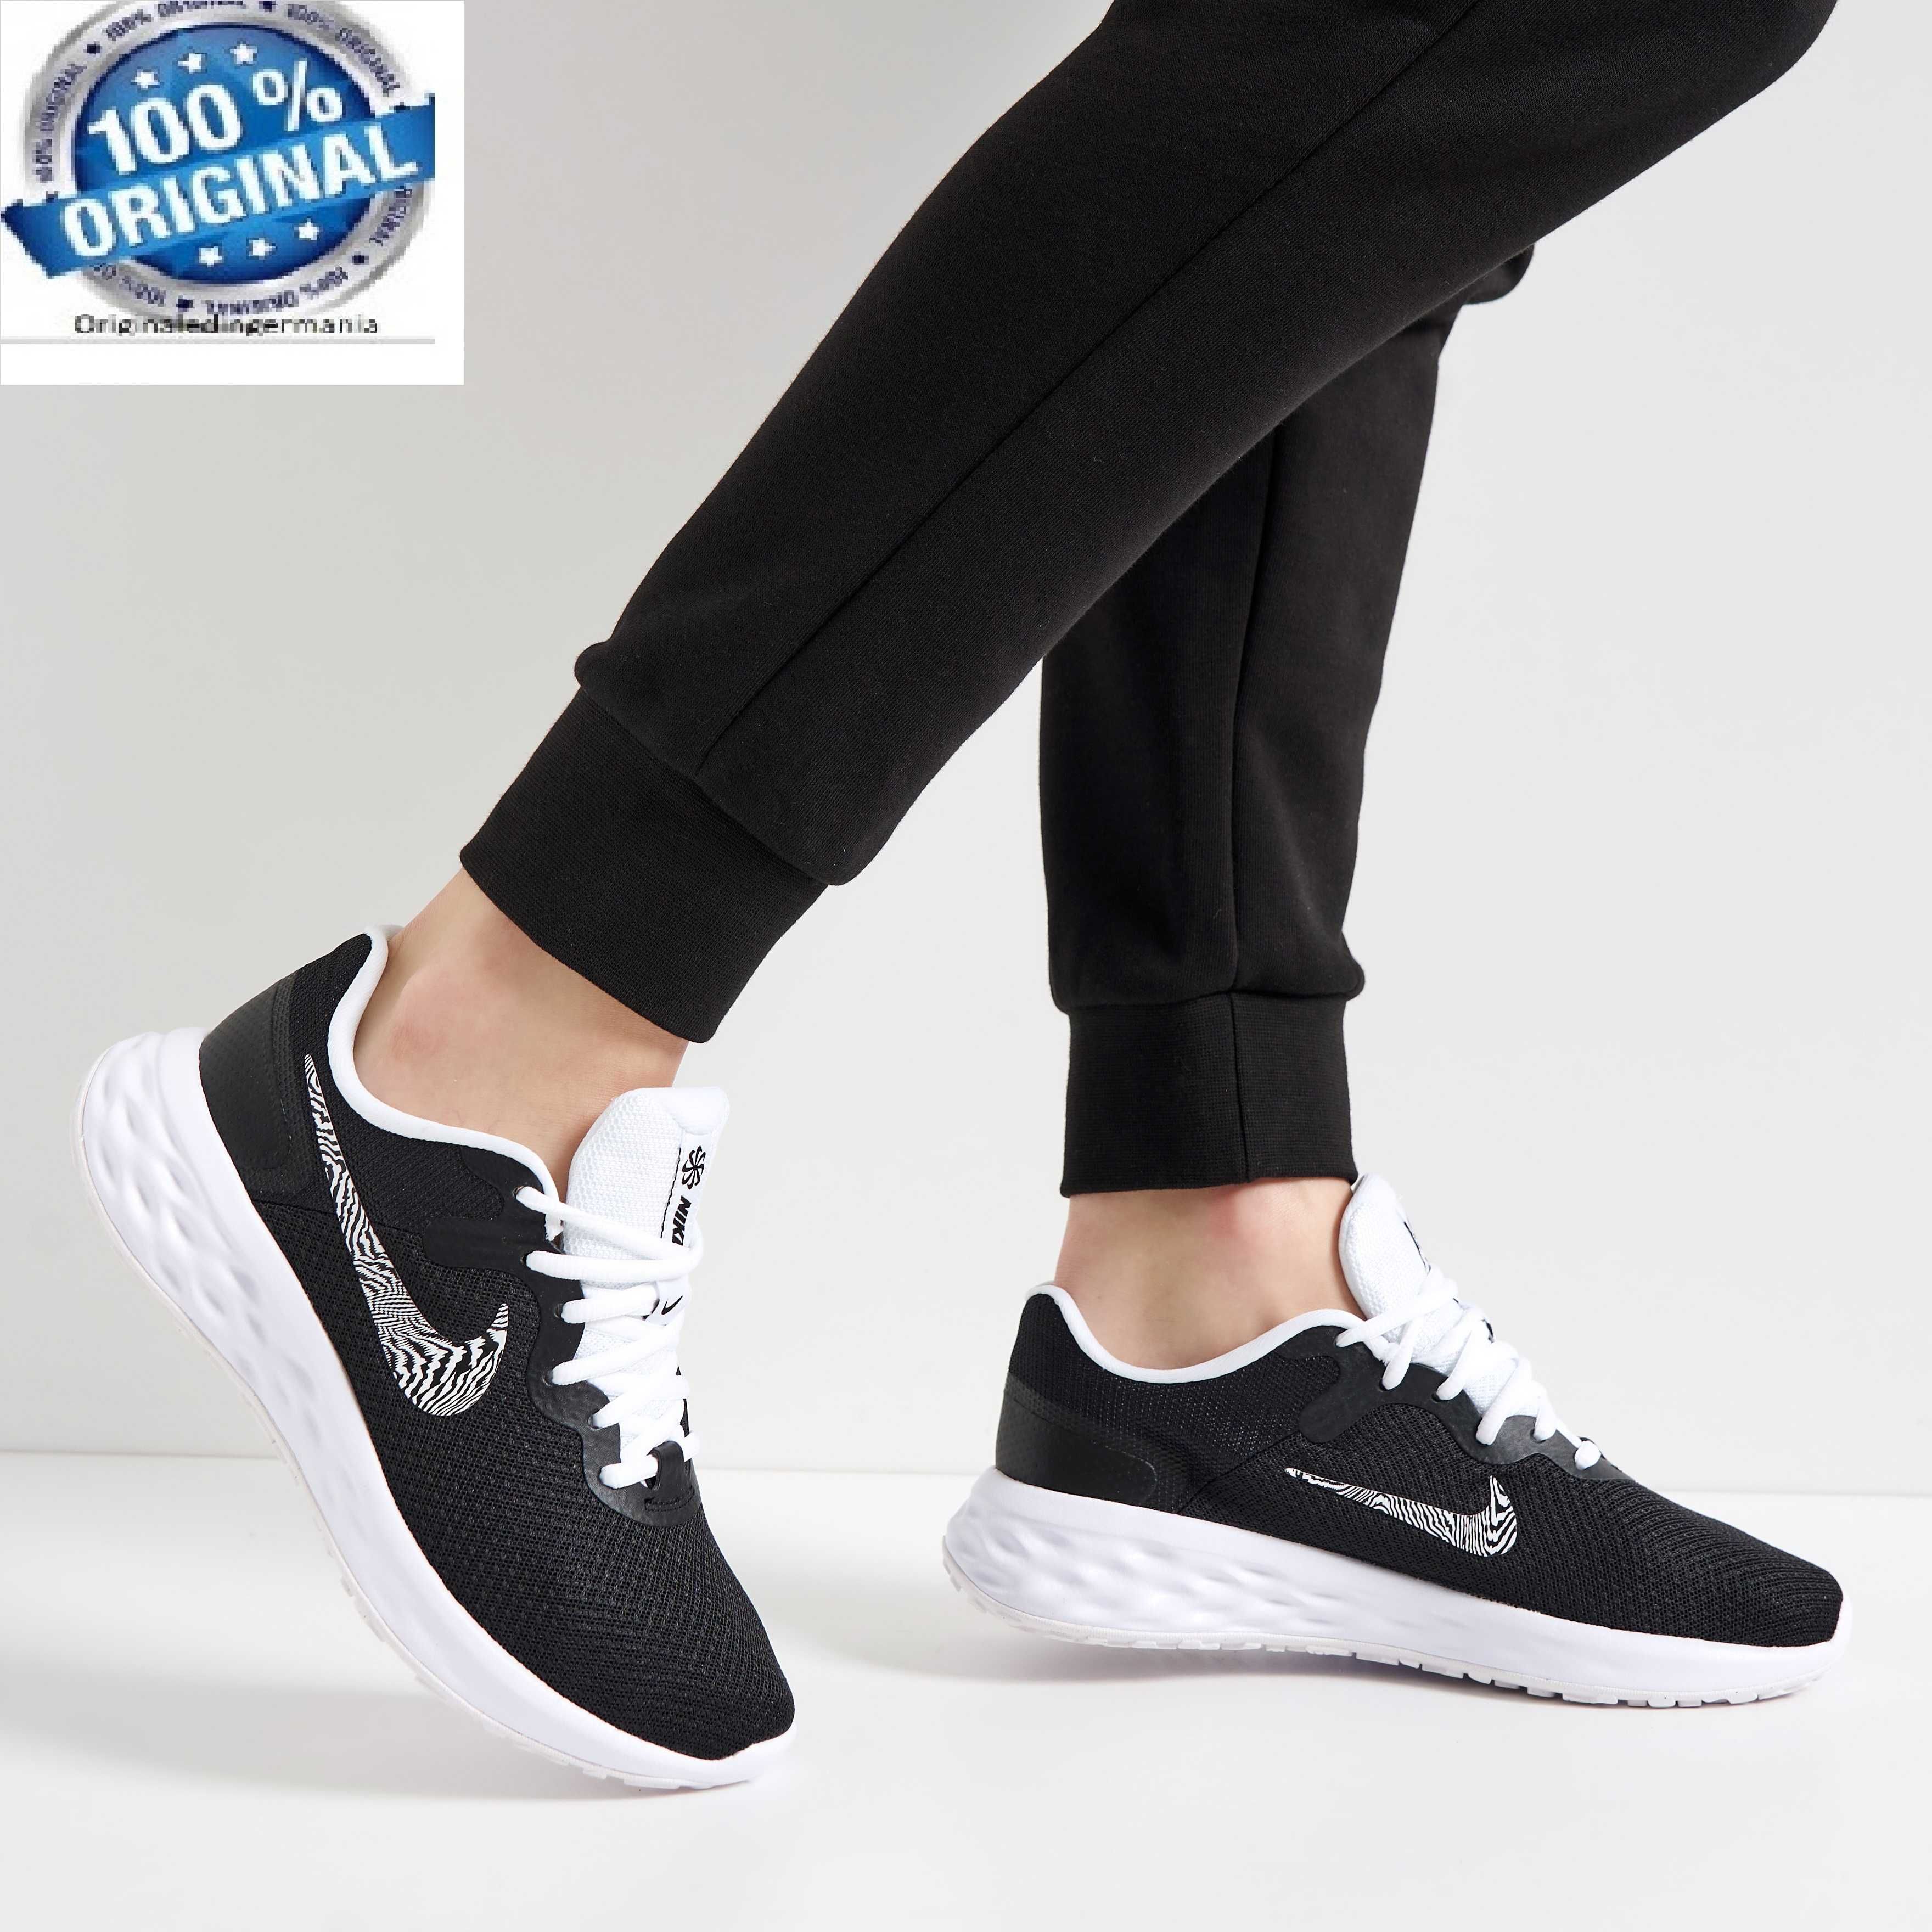 Adidasi Nike Revolution 6  Nature  "Zebra" ORIGINALI 100% nr 36; 36.5